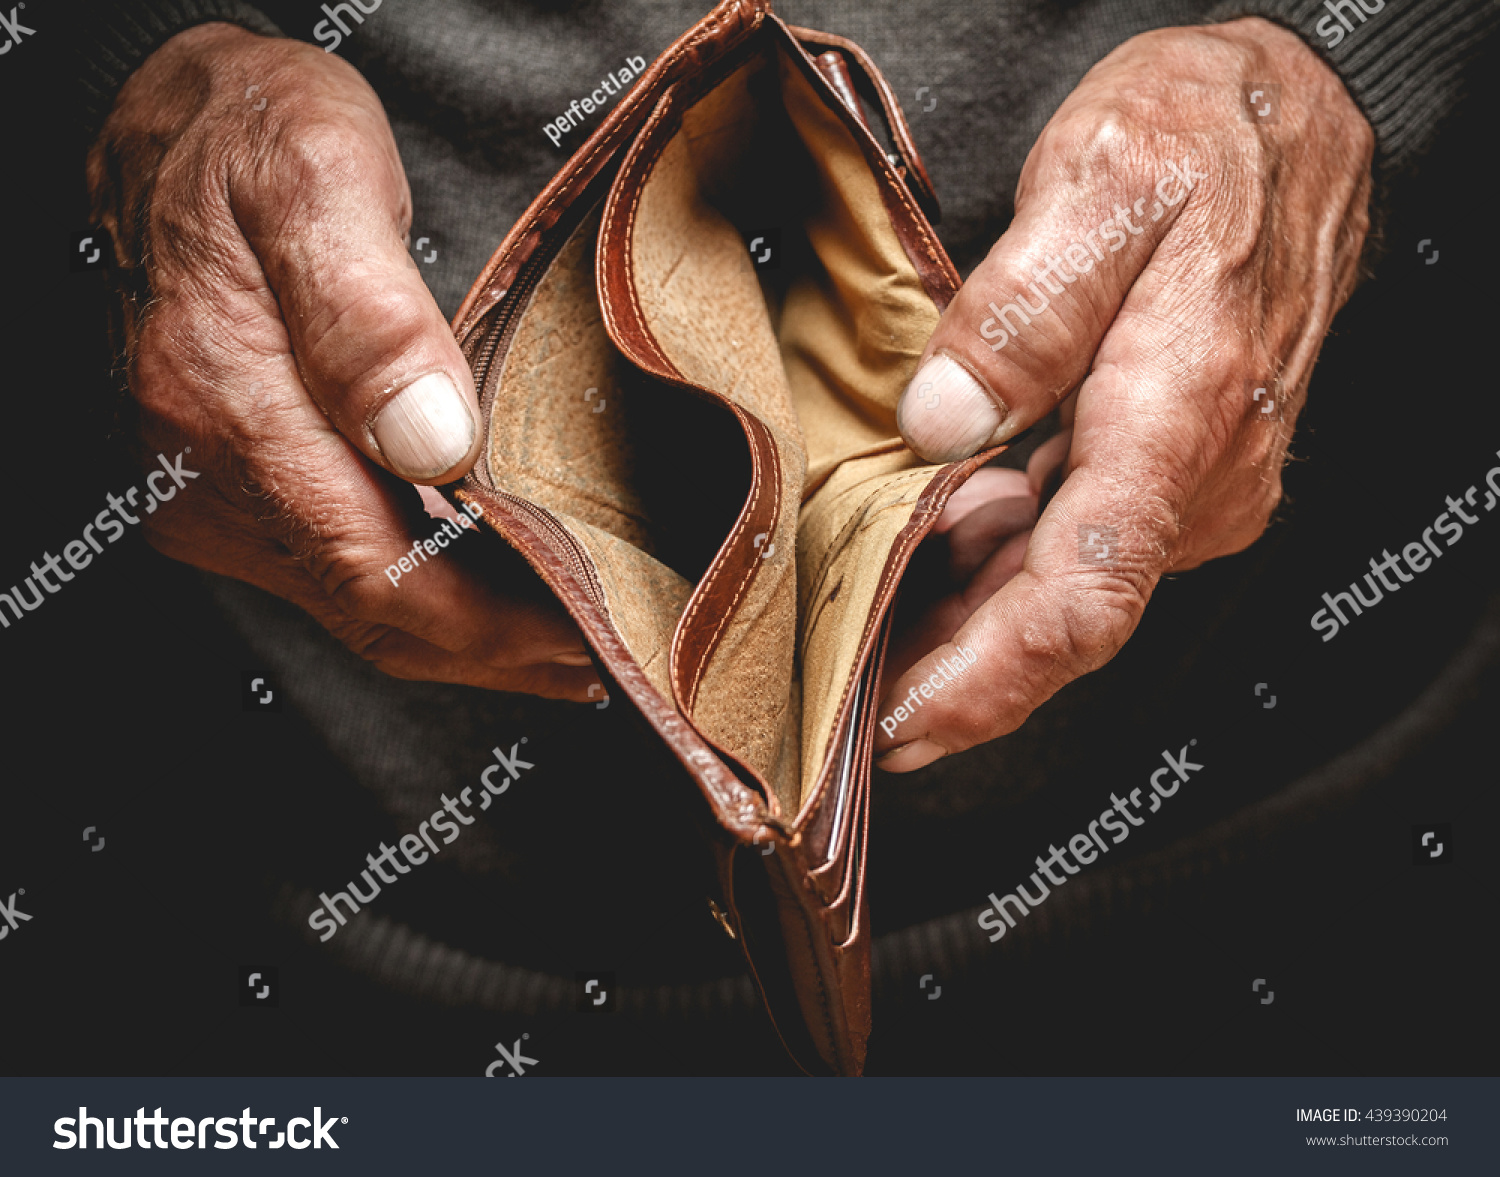 Empty wallet in the hands of an elderly man. Poverty in retirement concept #439390204